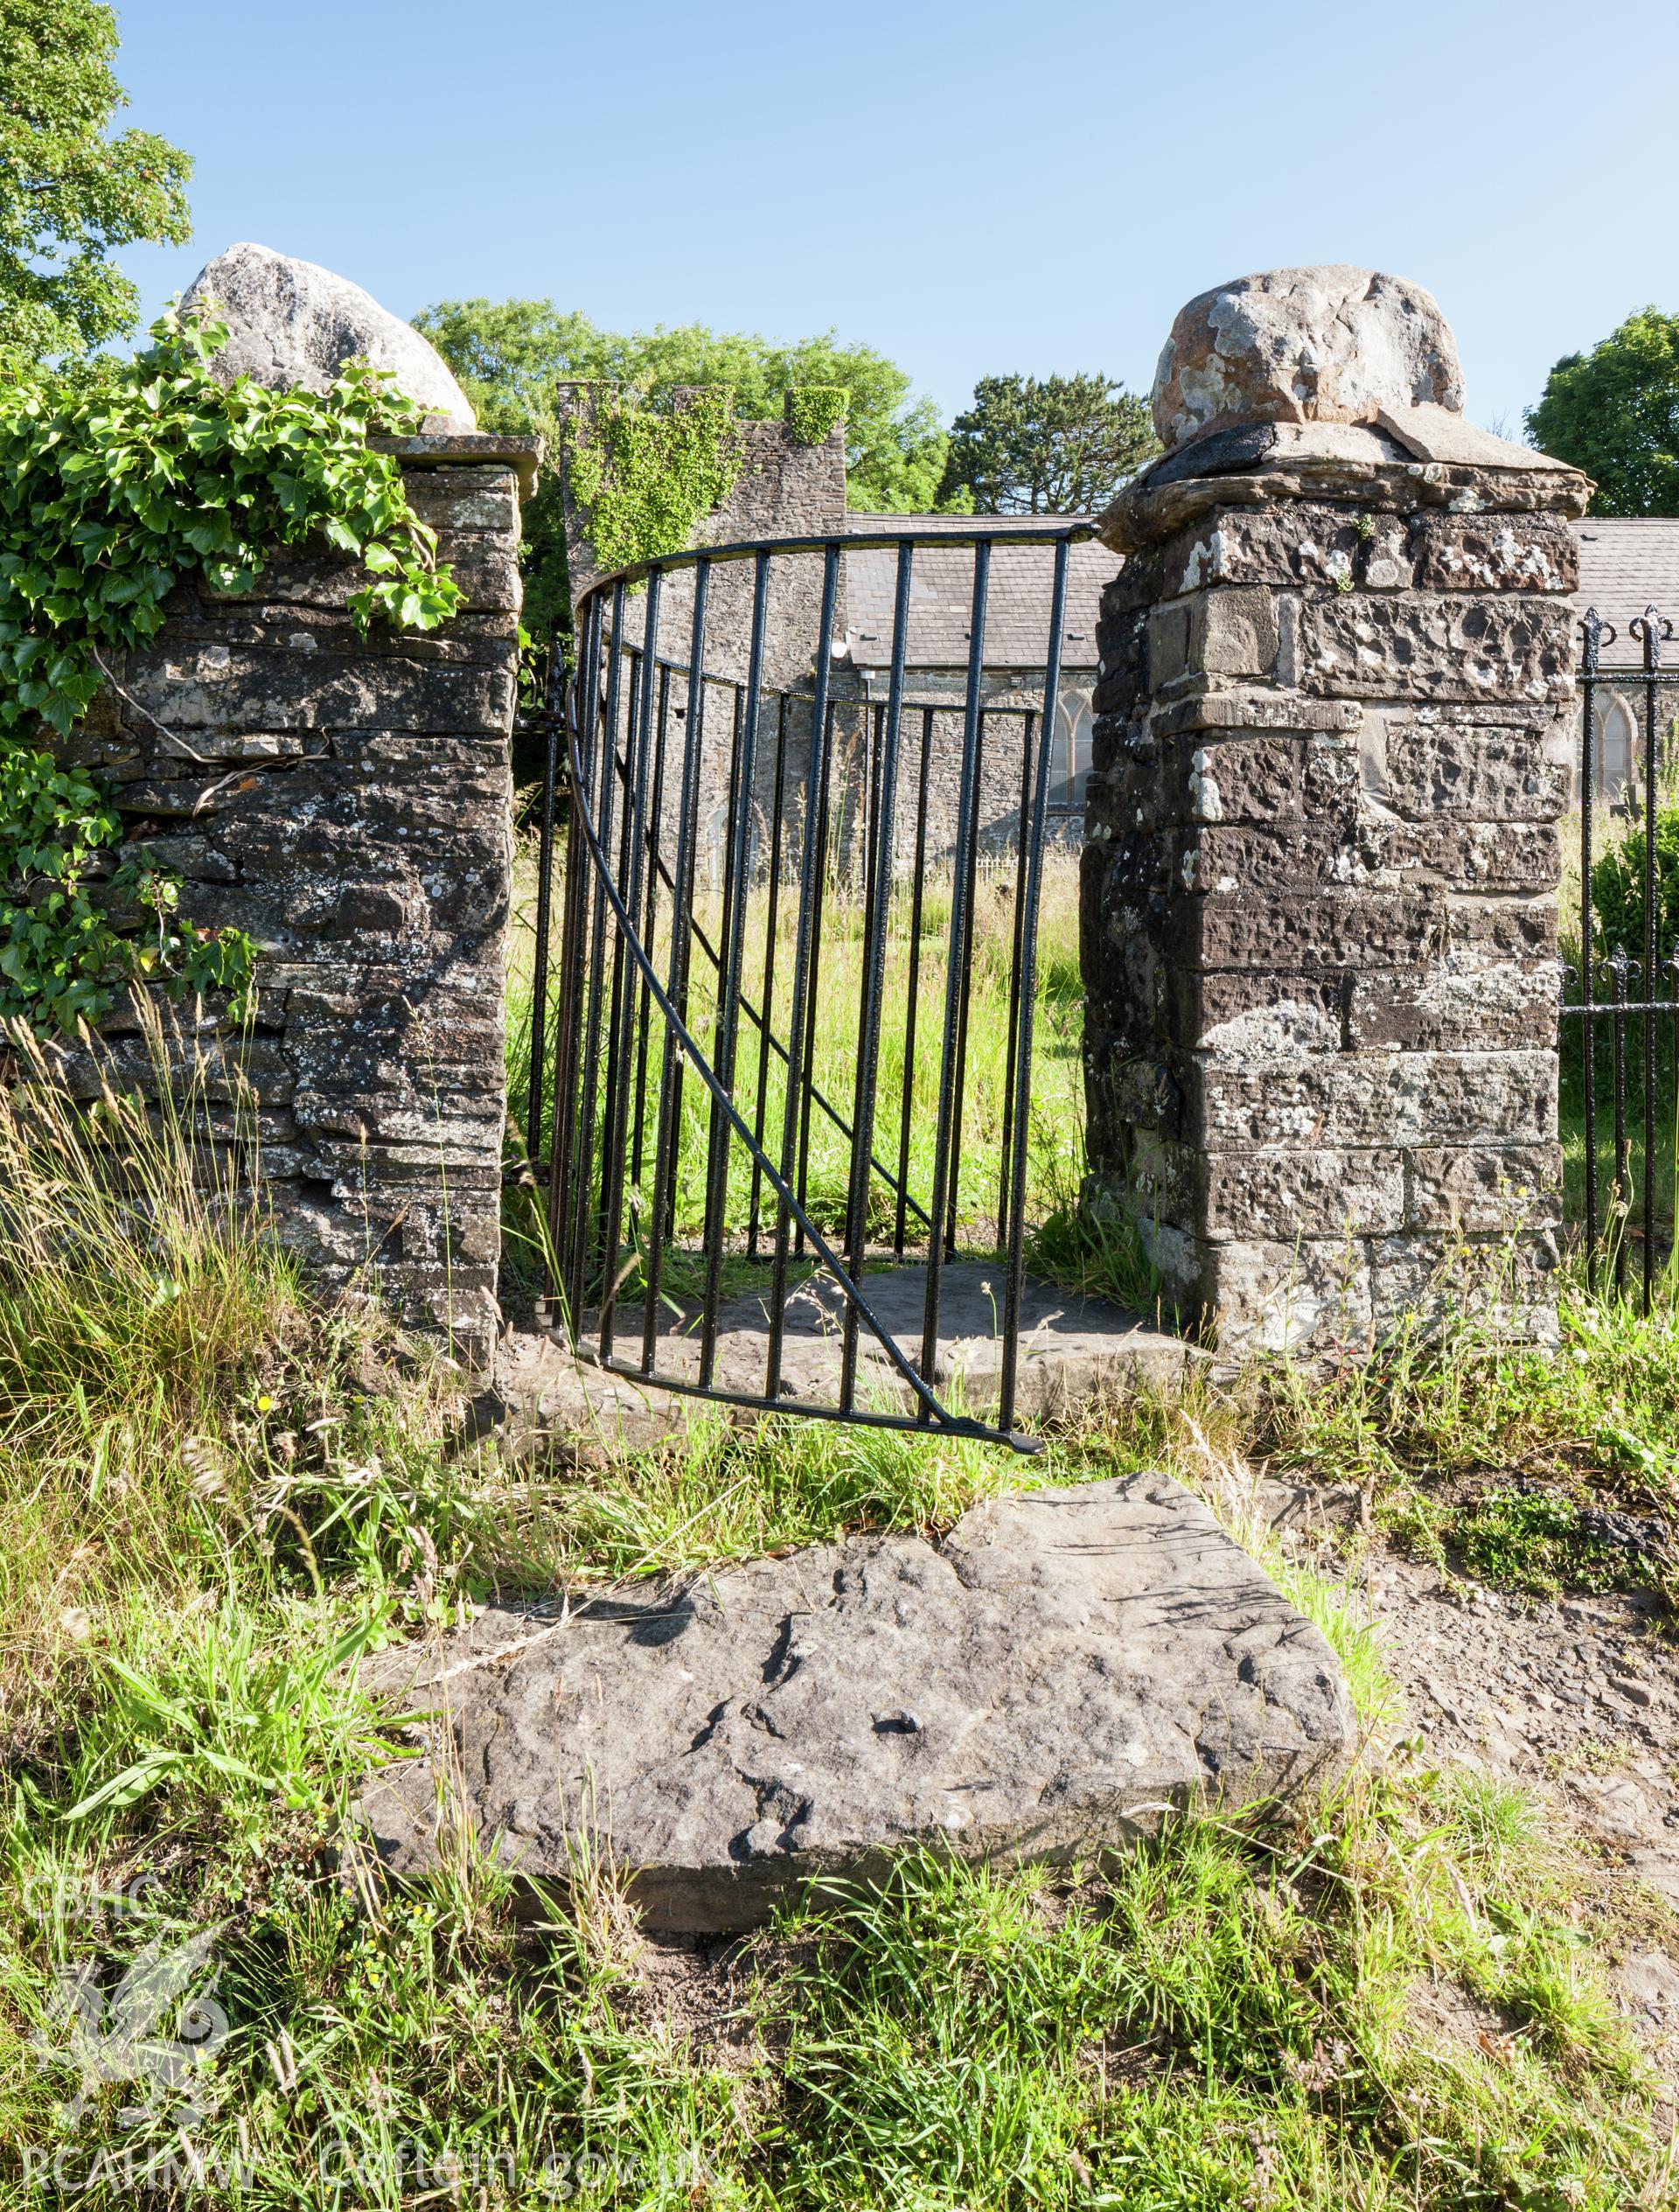 Locally made entrance gate